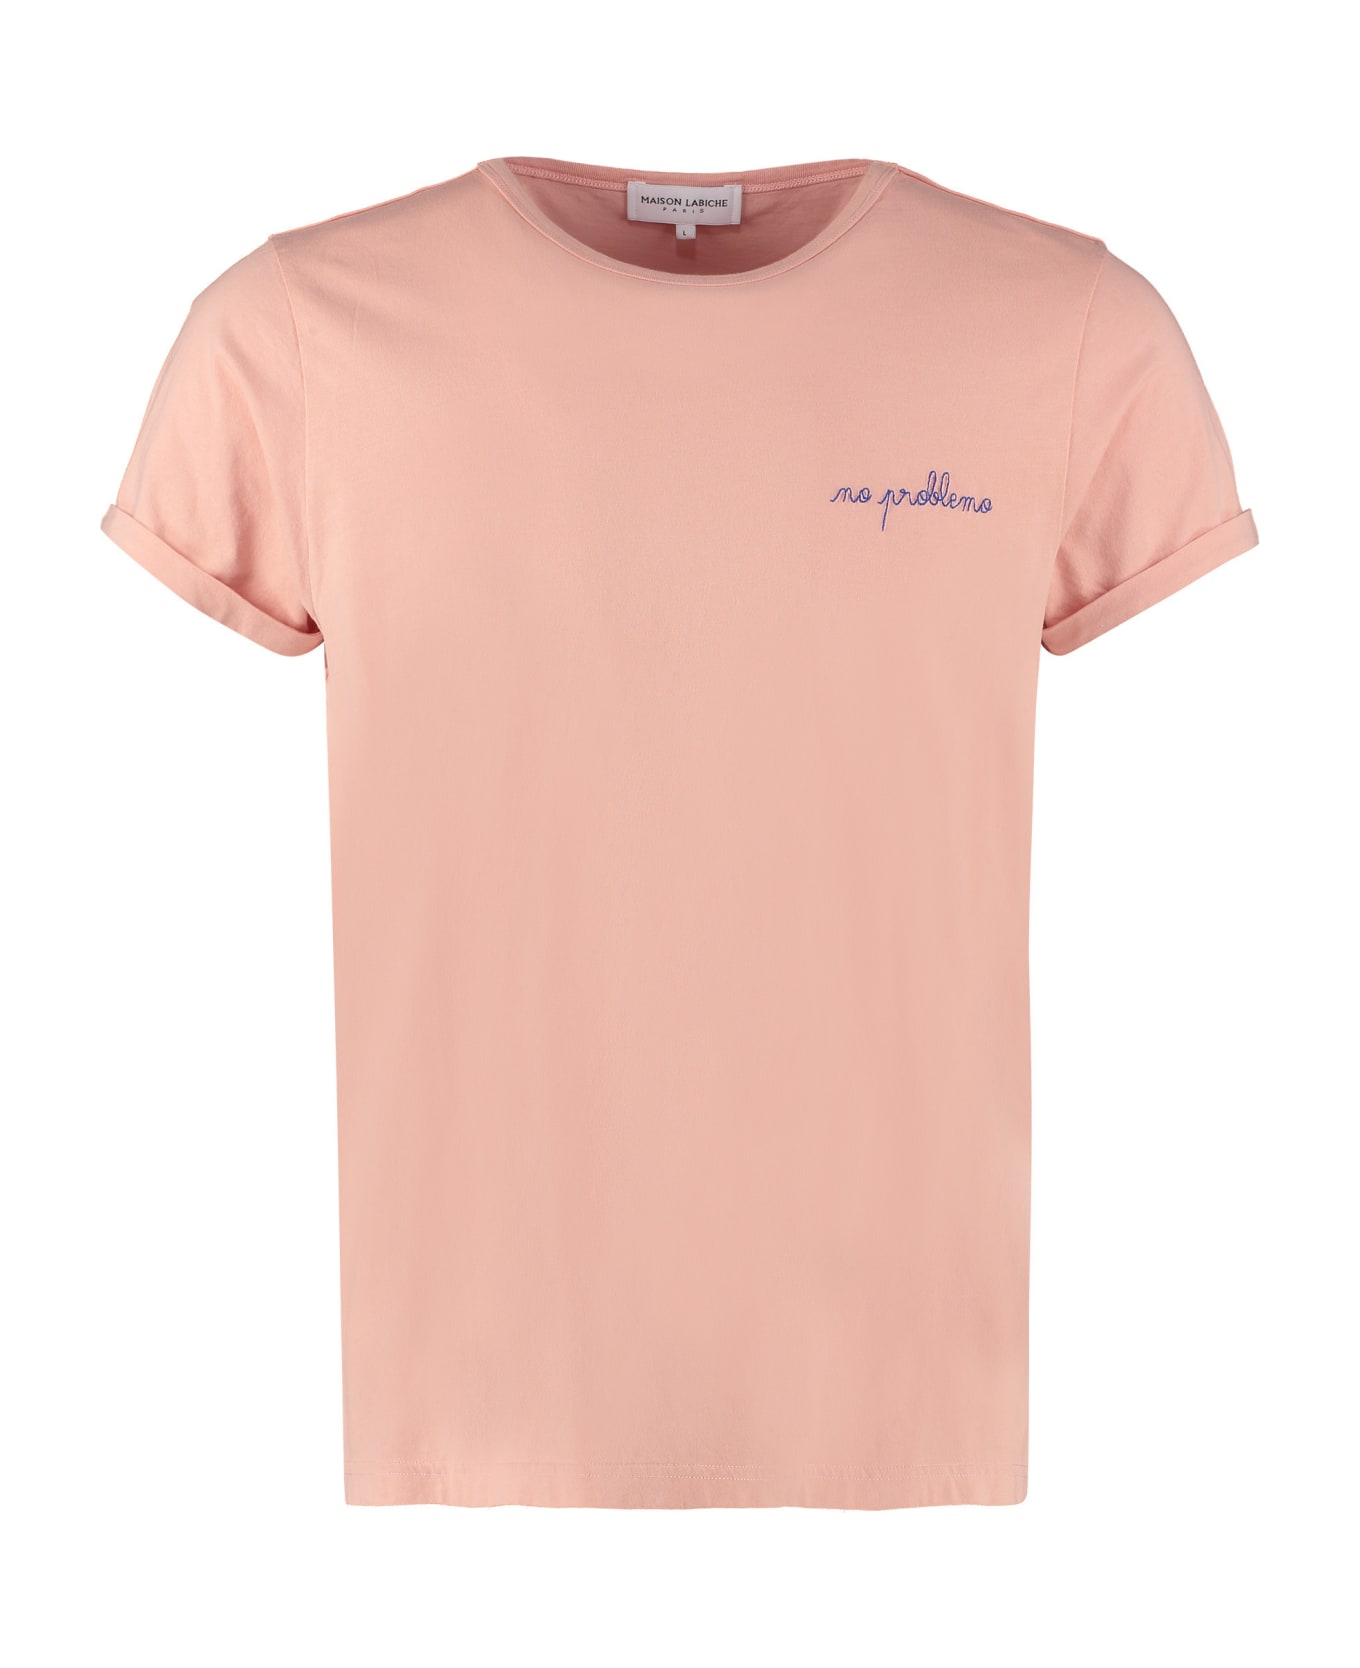 Maison Labiche Embroidered Cotton T-shirt - Salmon pink